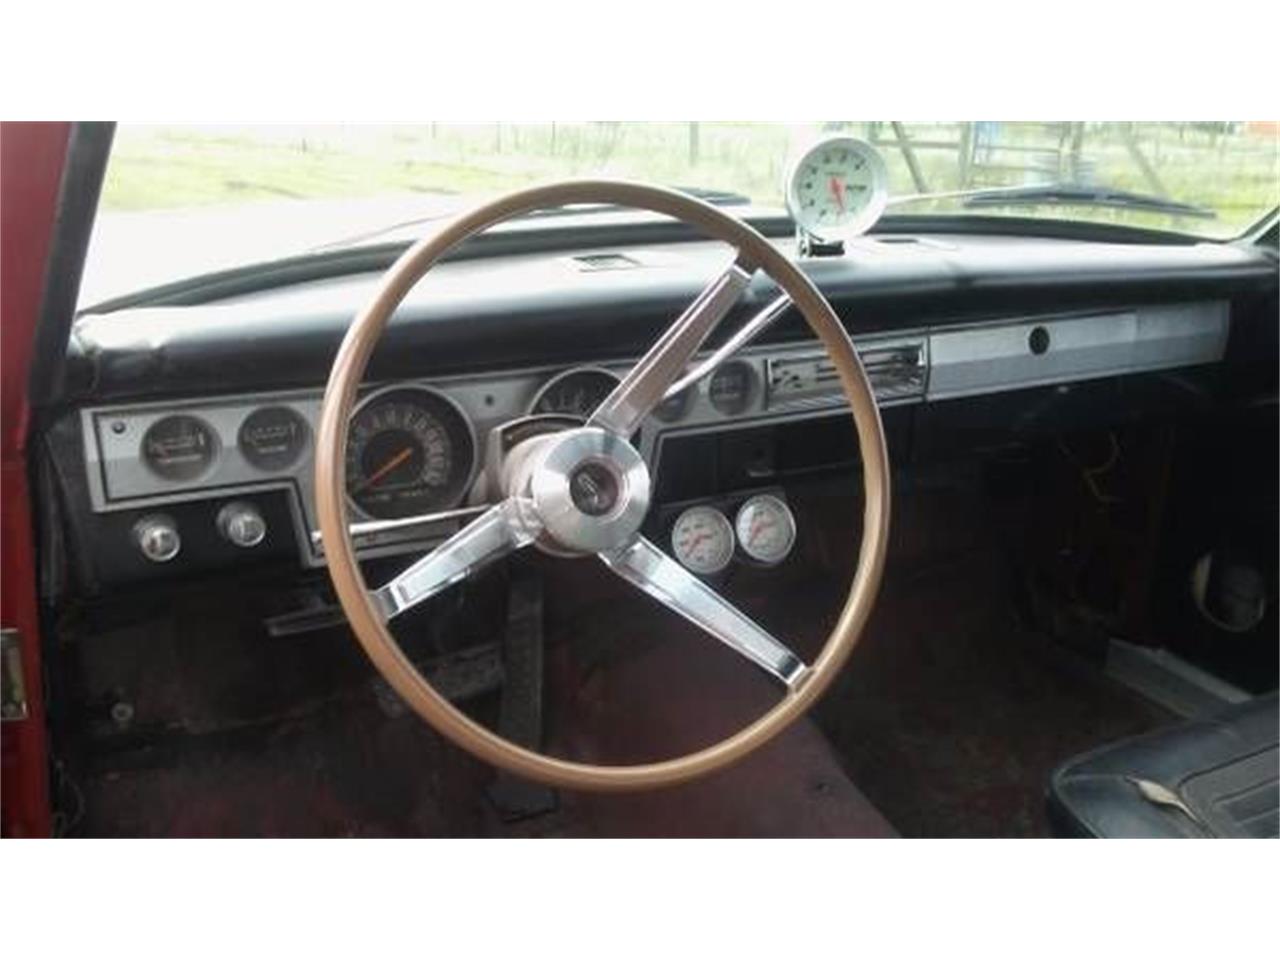 1966 Plymouth Barracuda for sale in Cadillac, MI ...